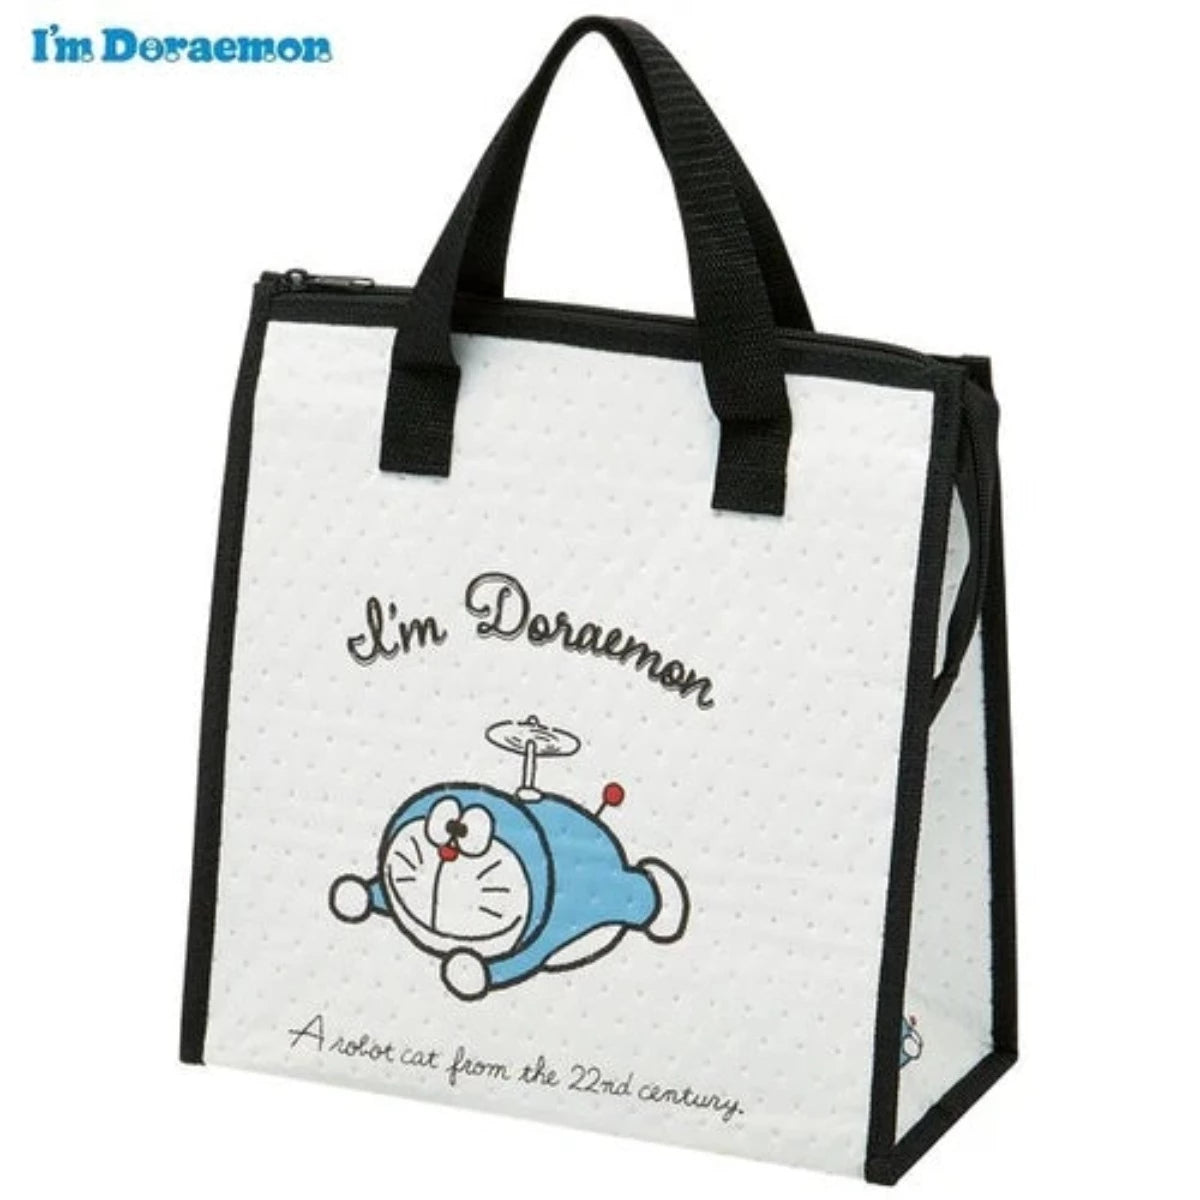 Lunch Bag Cooler - Doraemon 50th Anniversary (Japan Edition)